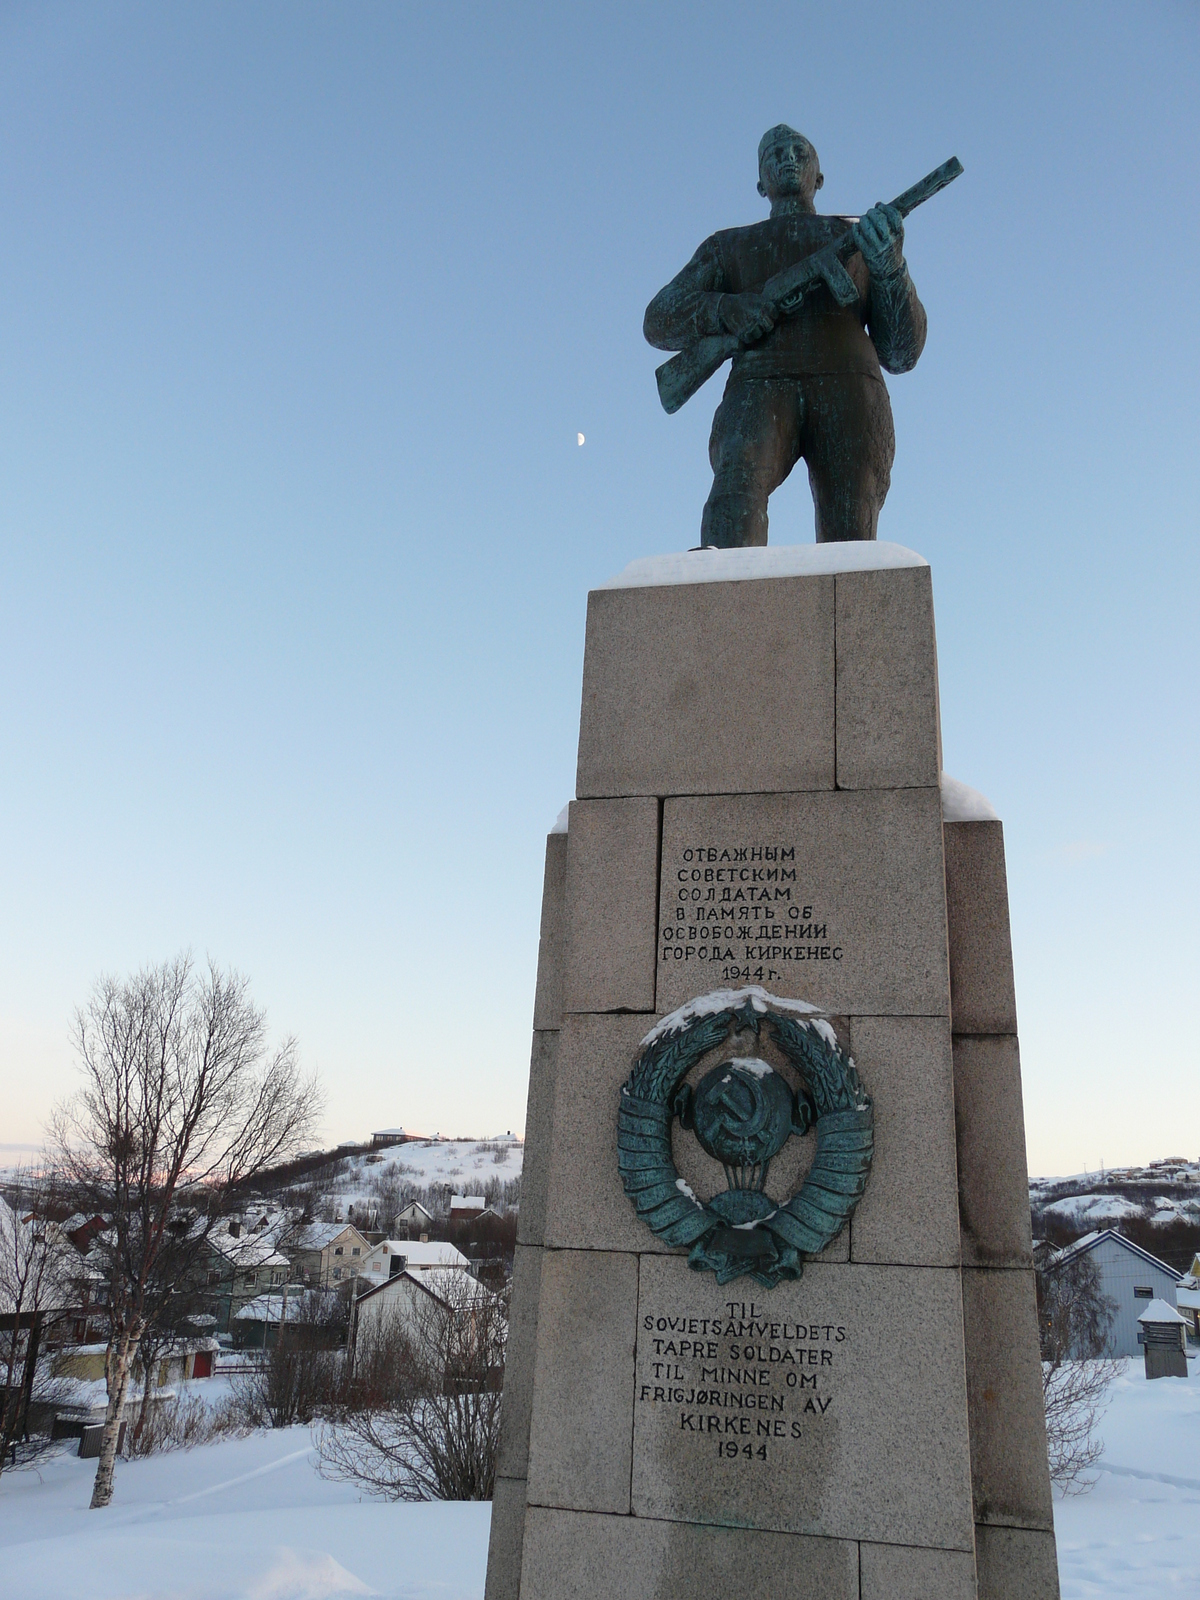 Soviet Liberation Monument in Kirkenes